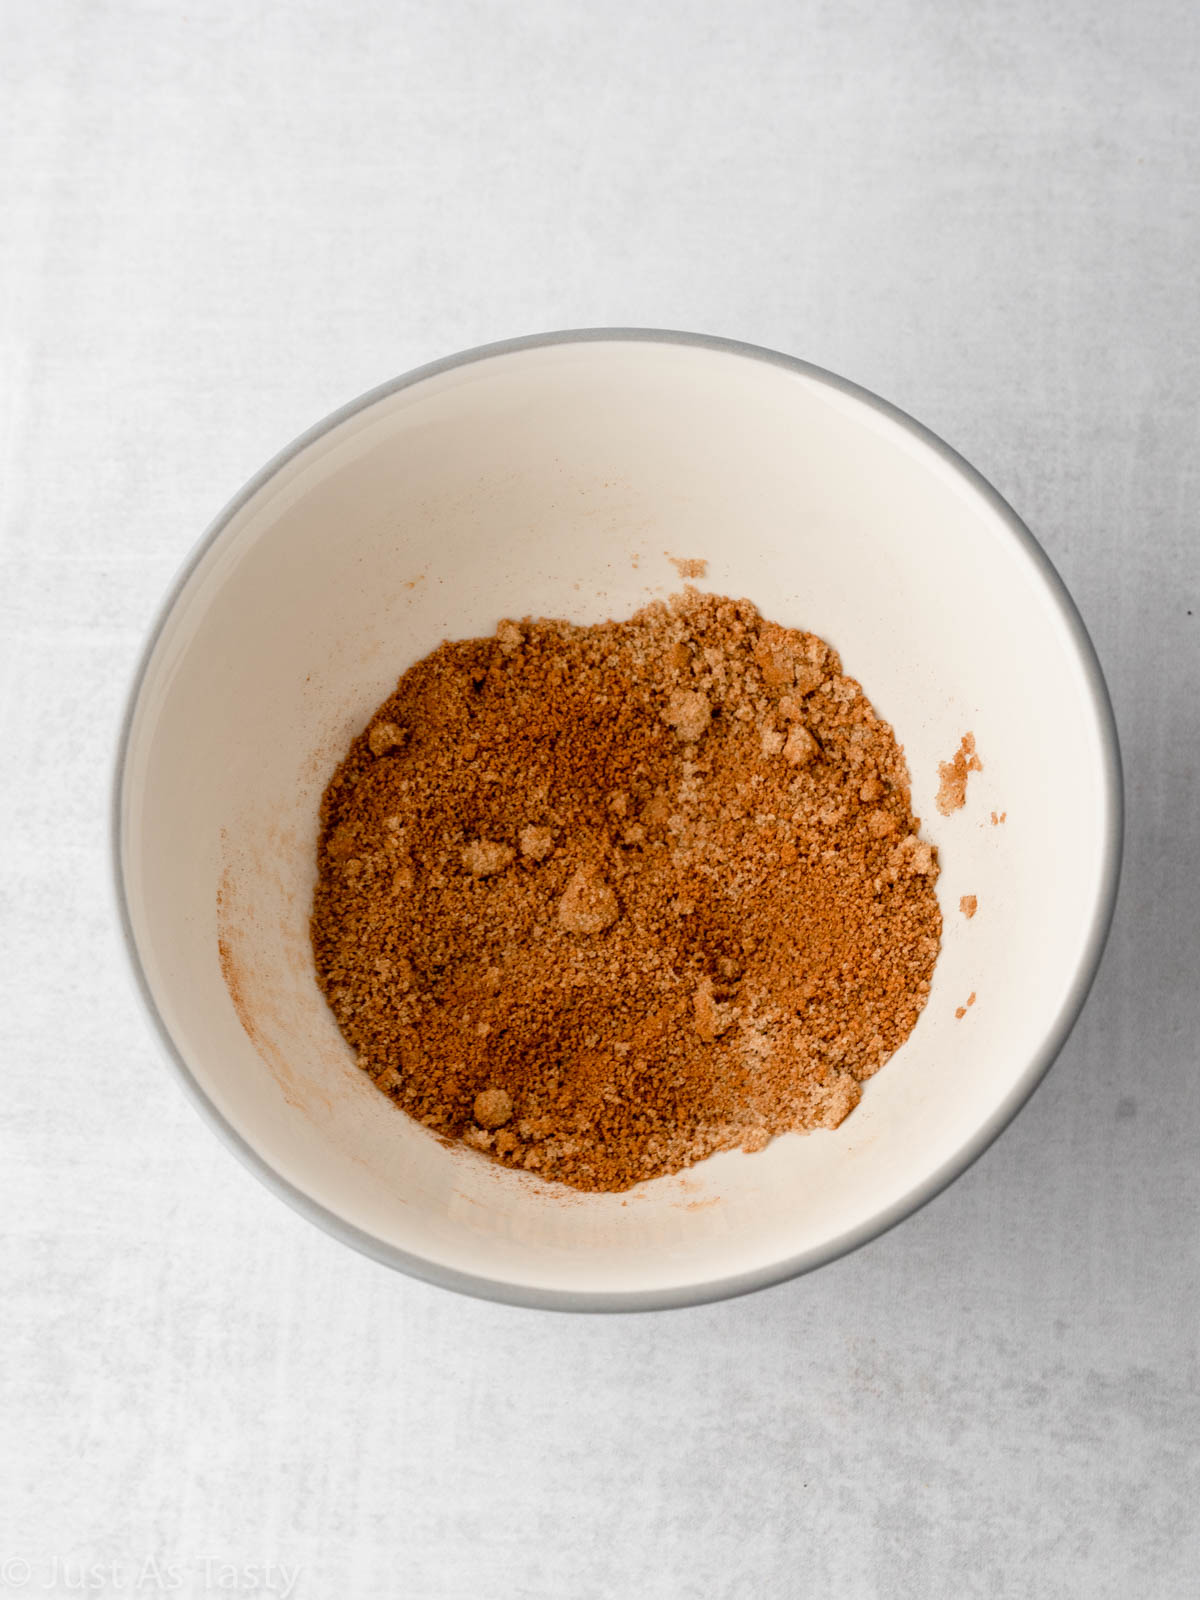 Cinnamon sugar in a bowl.